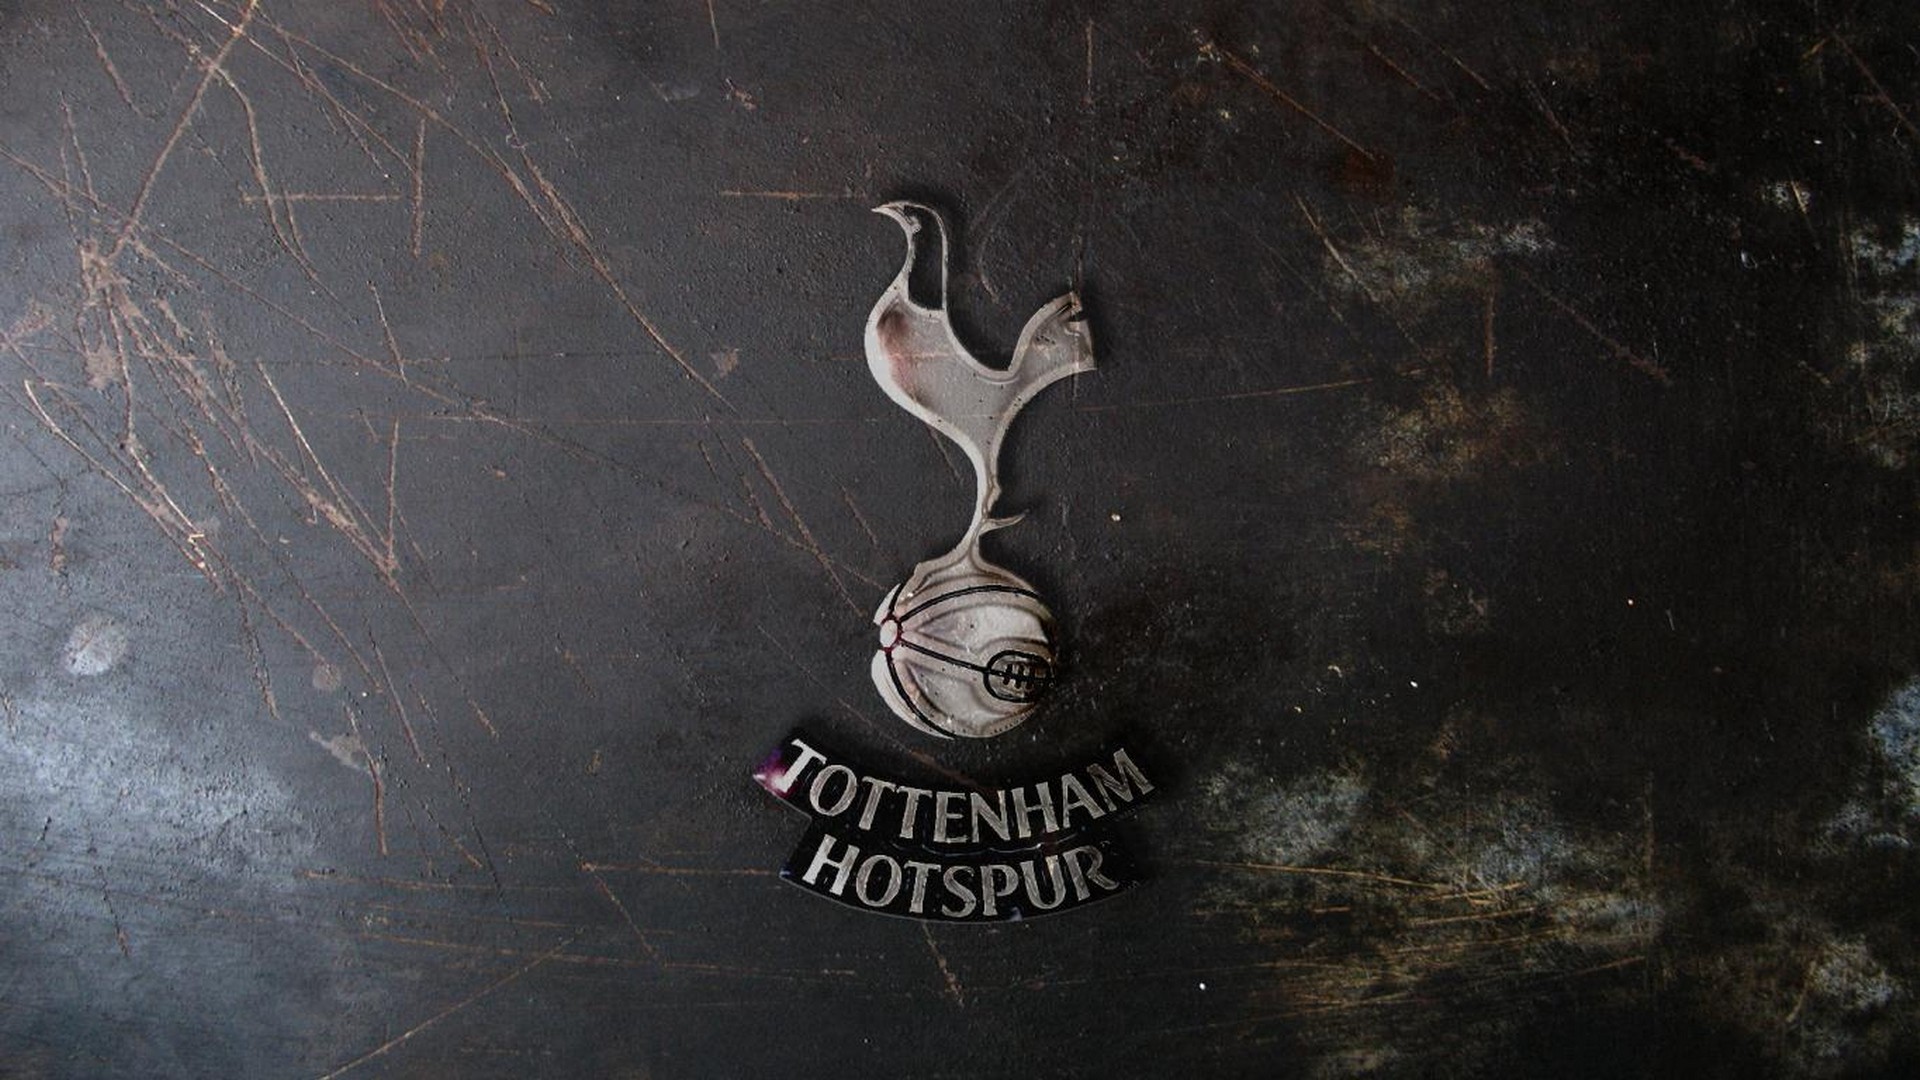 Tottenham Hotspur Wallpaper Hd 2019 Football Wallpaper